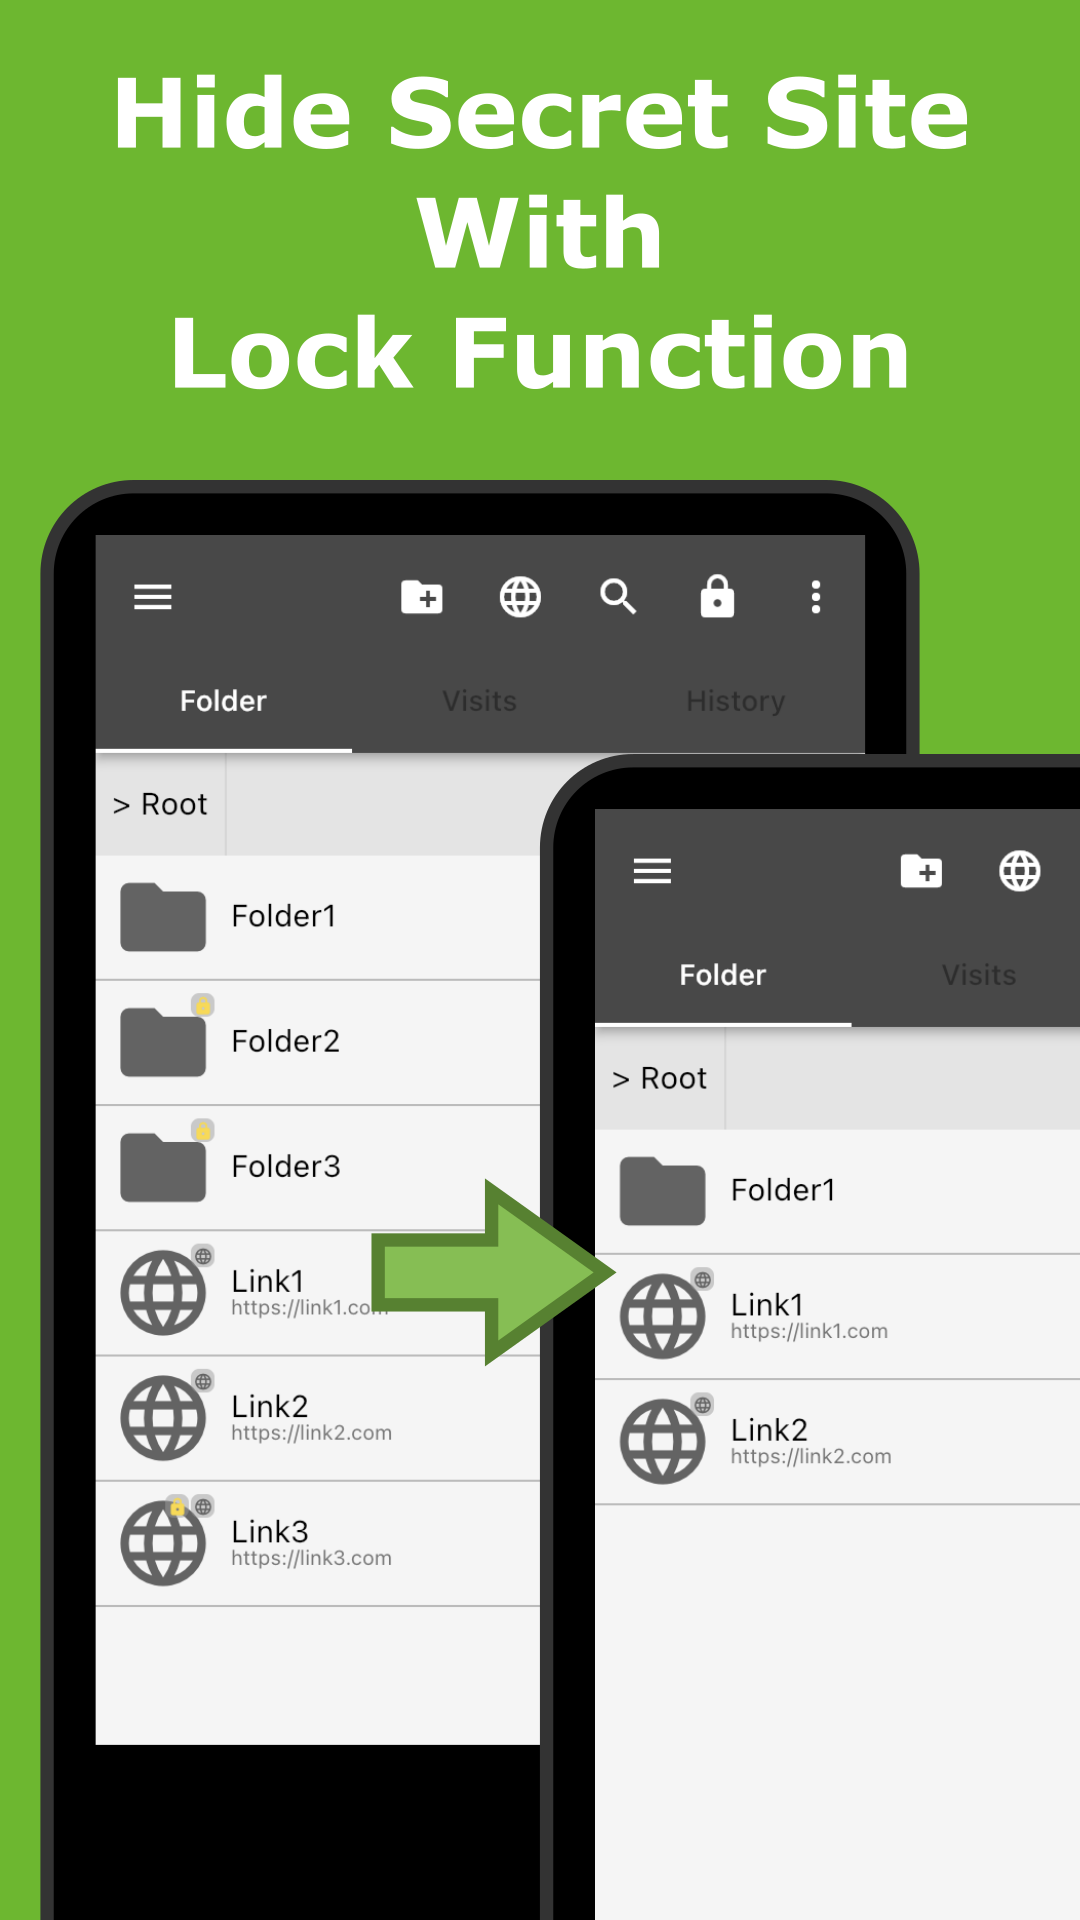 Android application Bookmark Folder (Key) screenshort